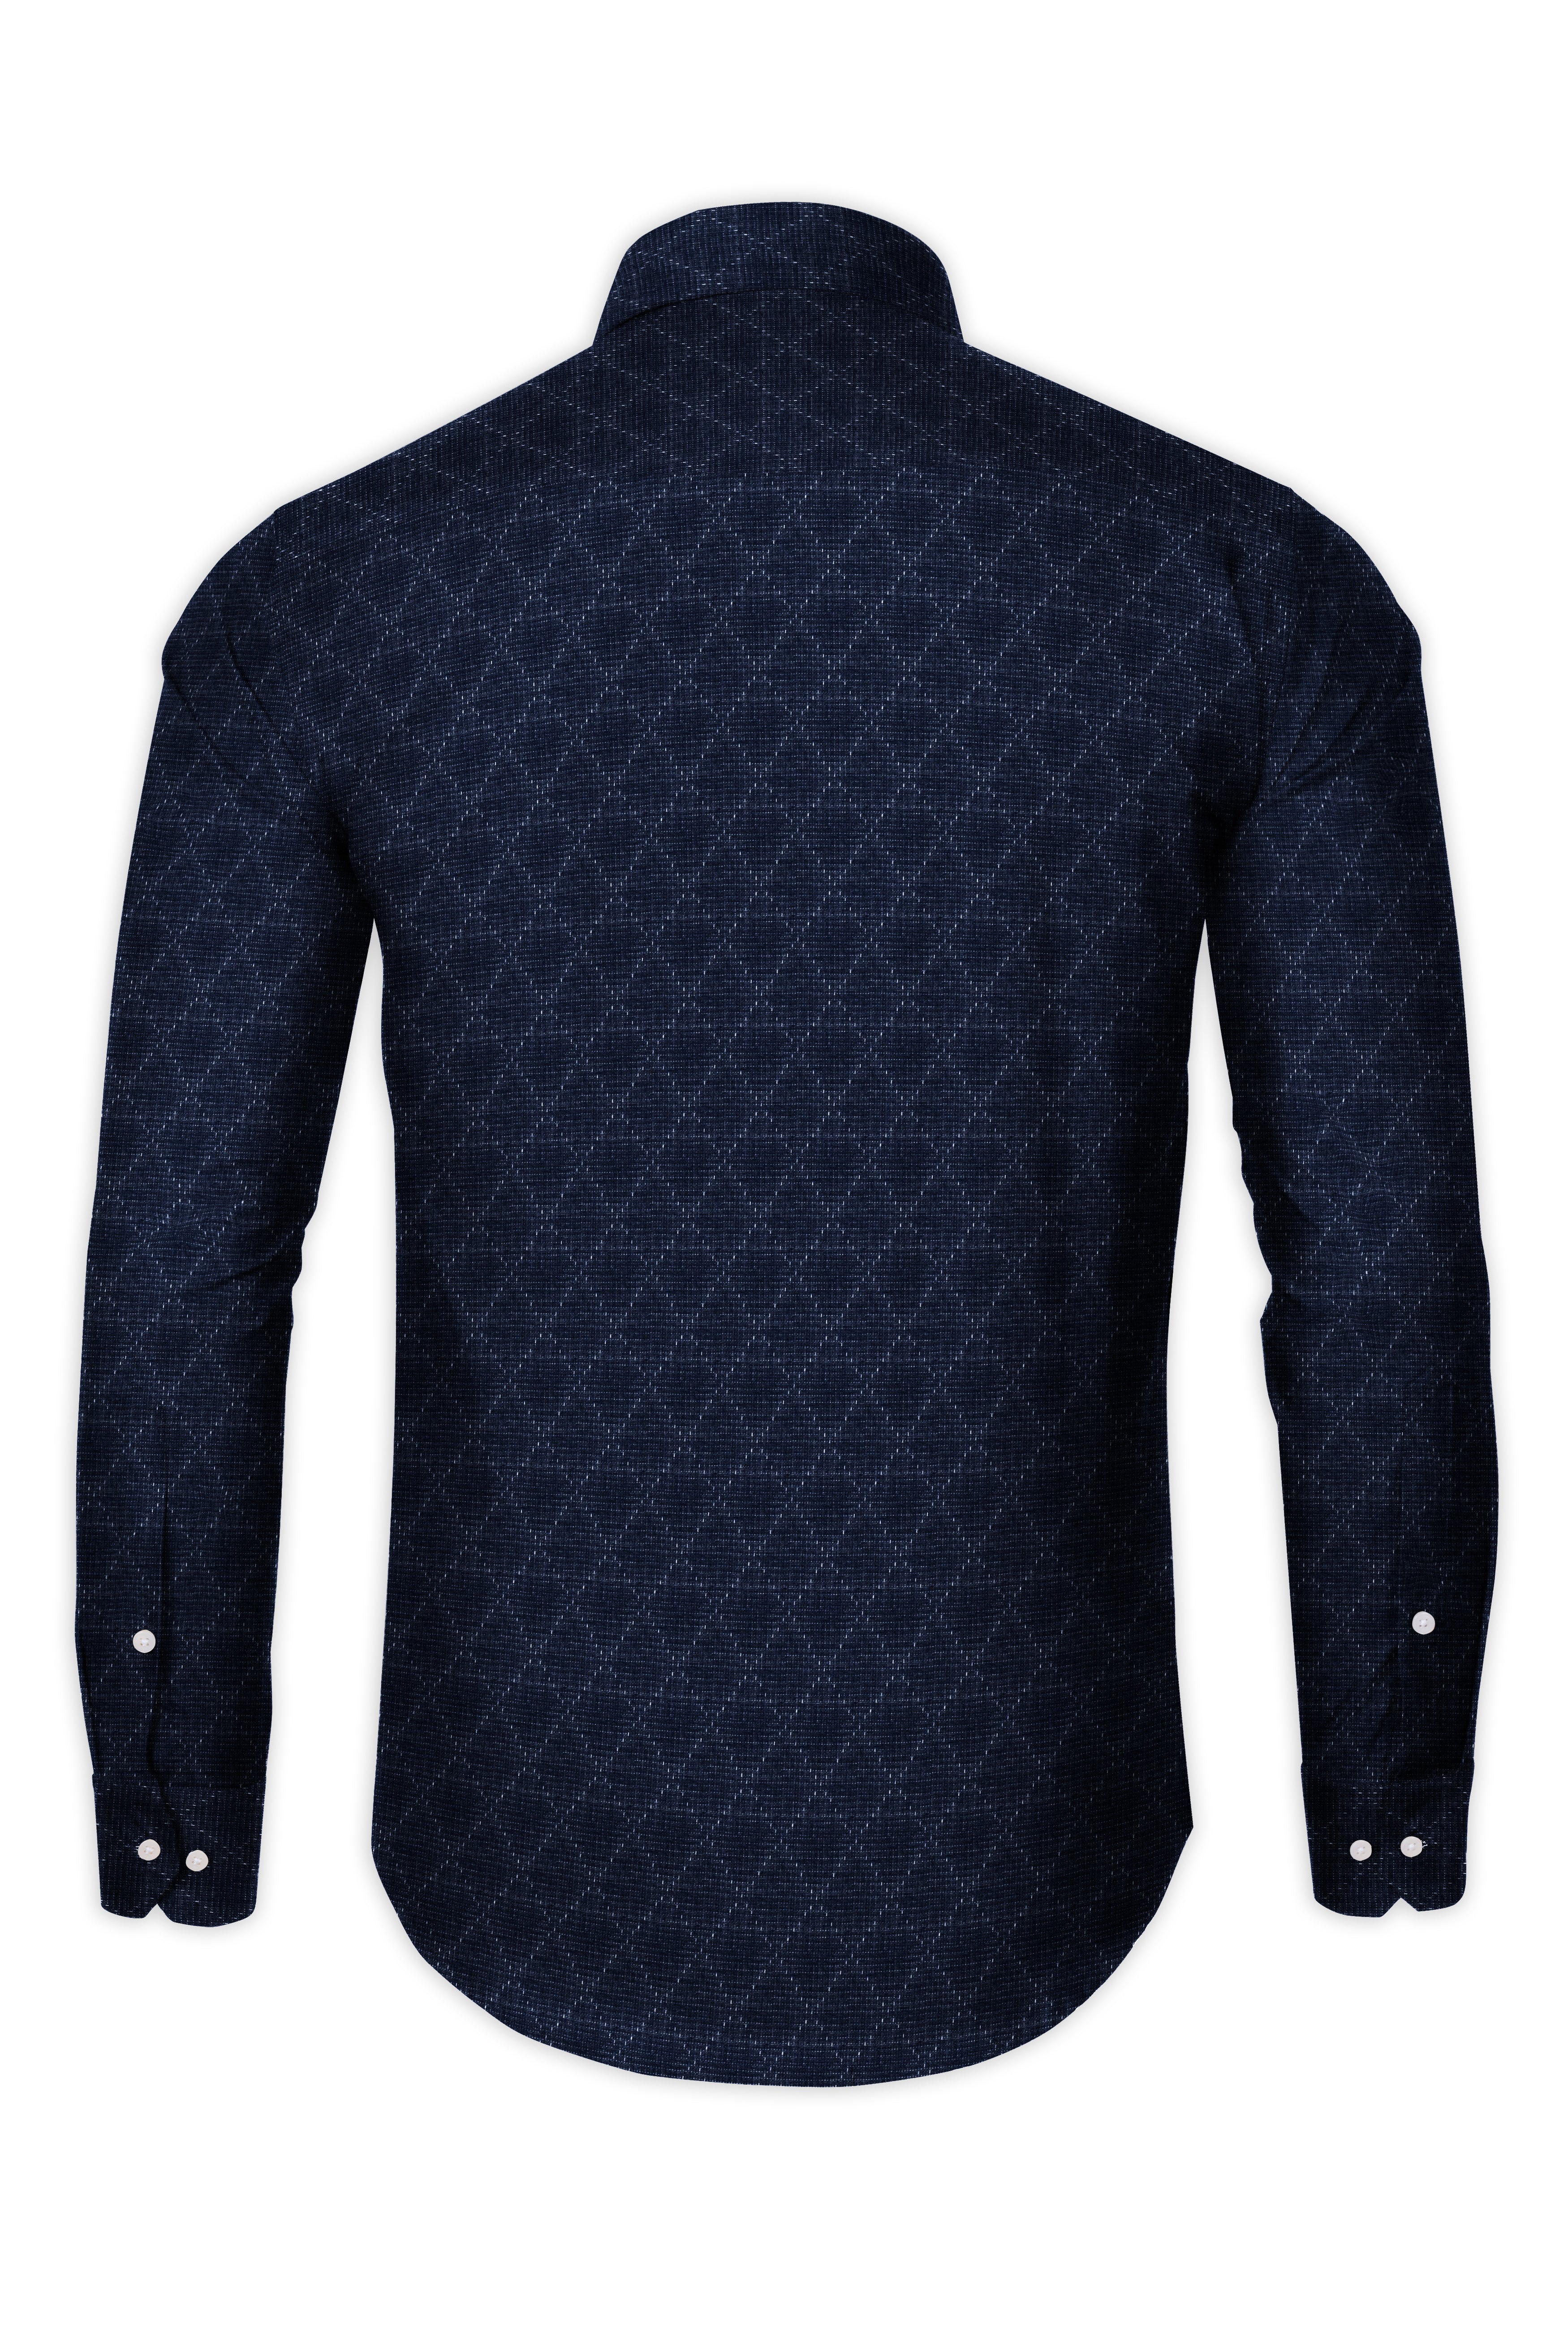 Vulcan Blue Dobby Textured Premium Cotton Shirt